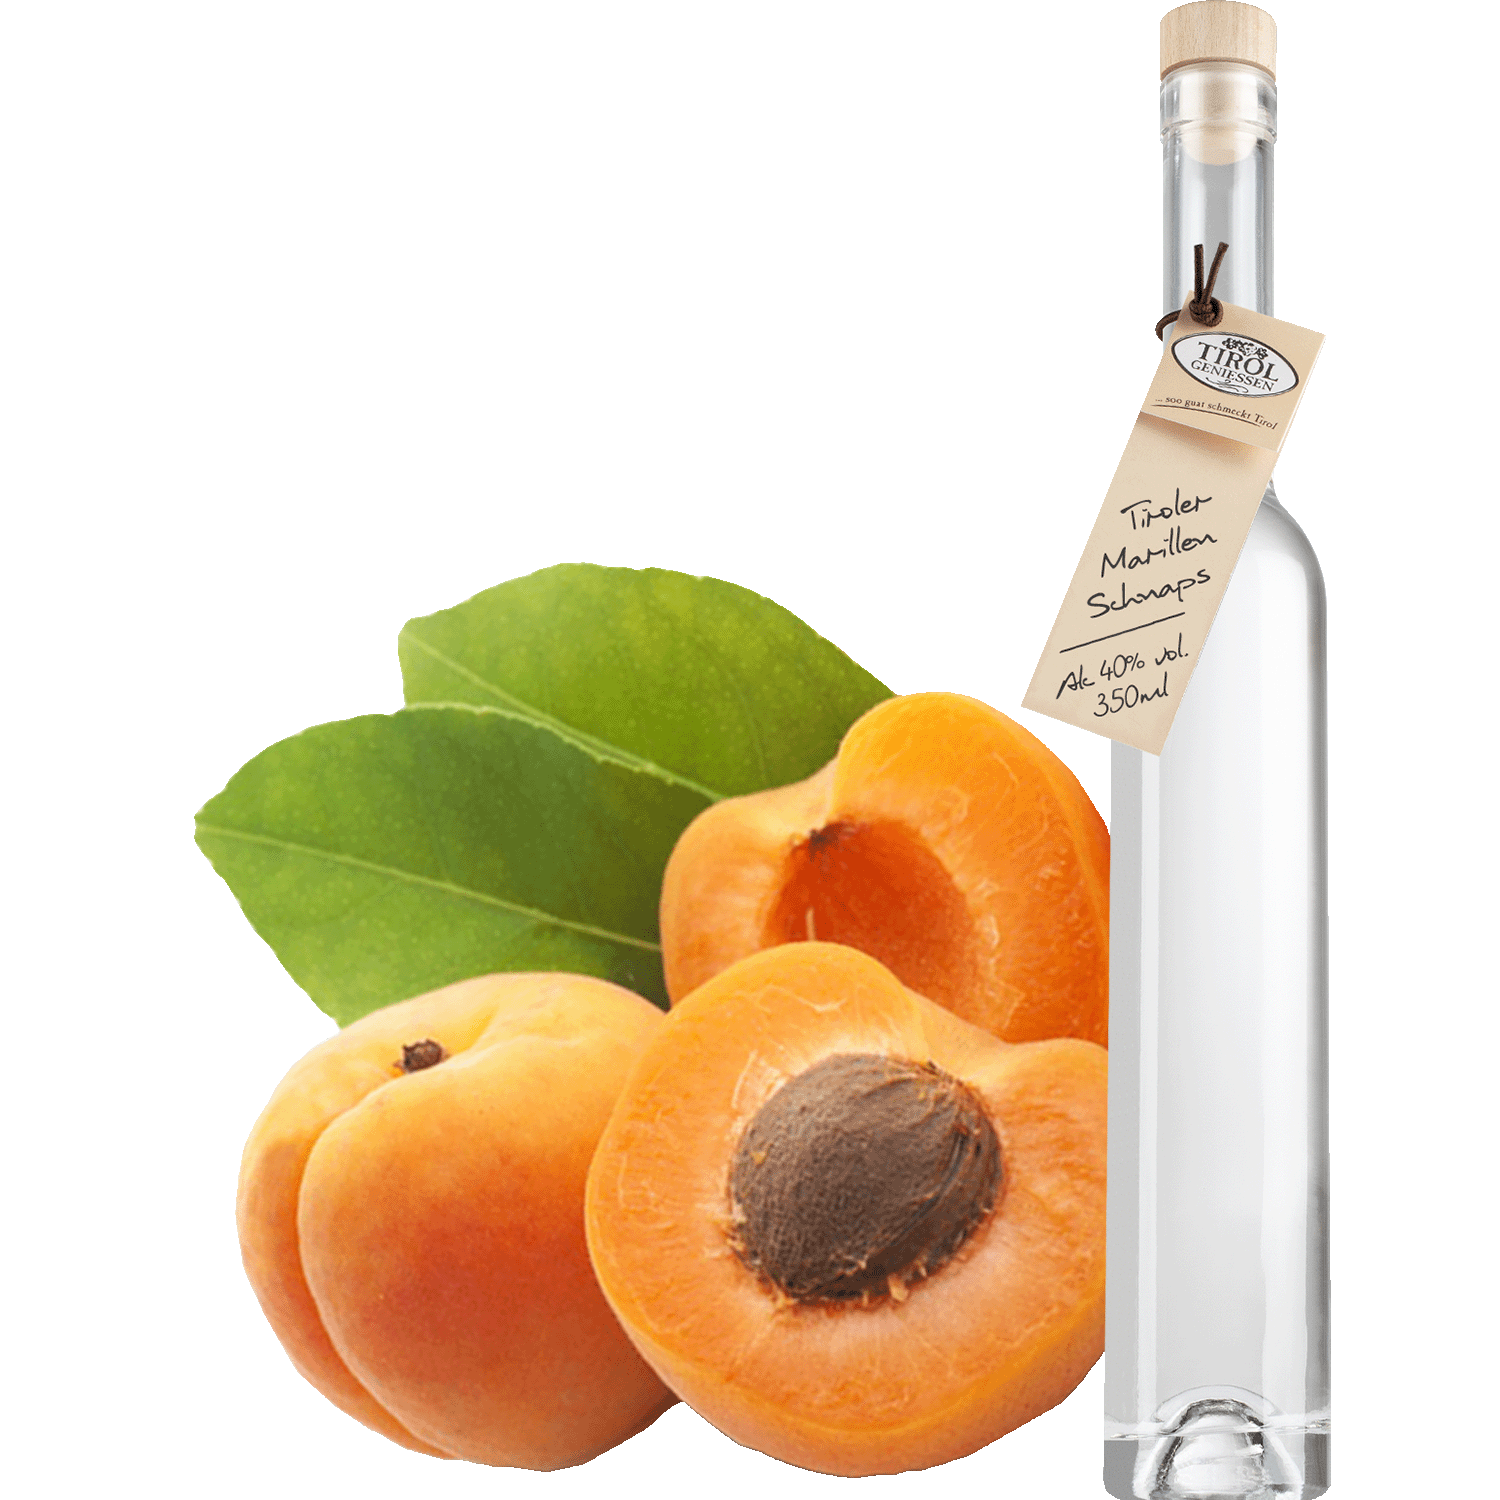 Apricot Schnapps in gift bottle from Austria from Tirol Geniessen